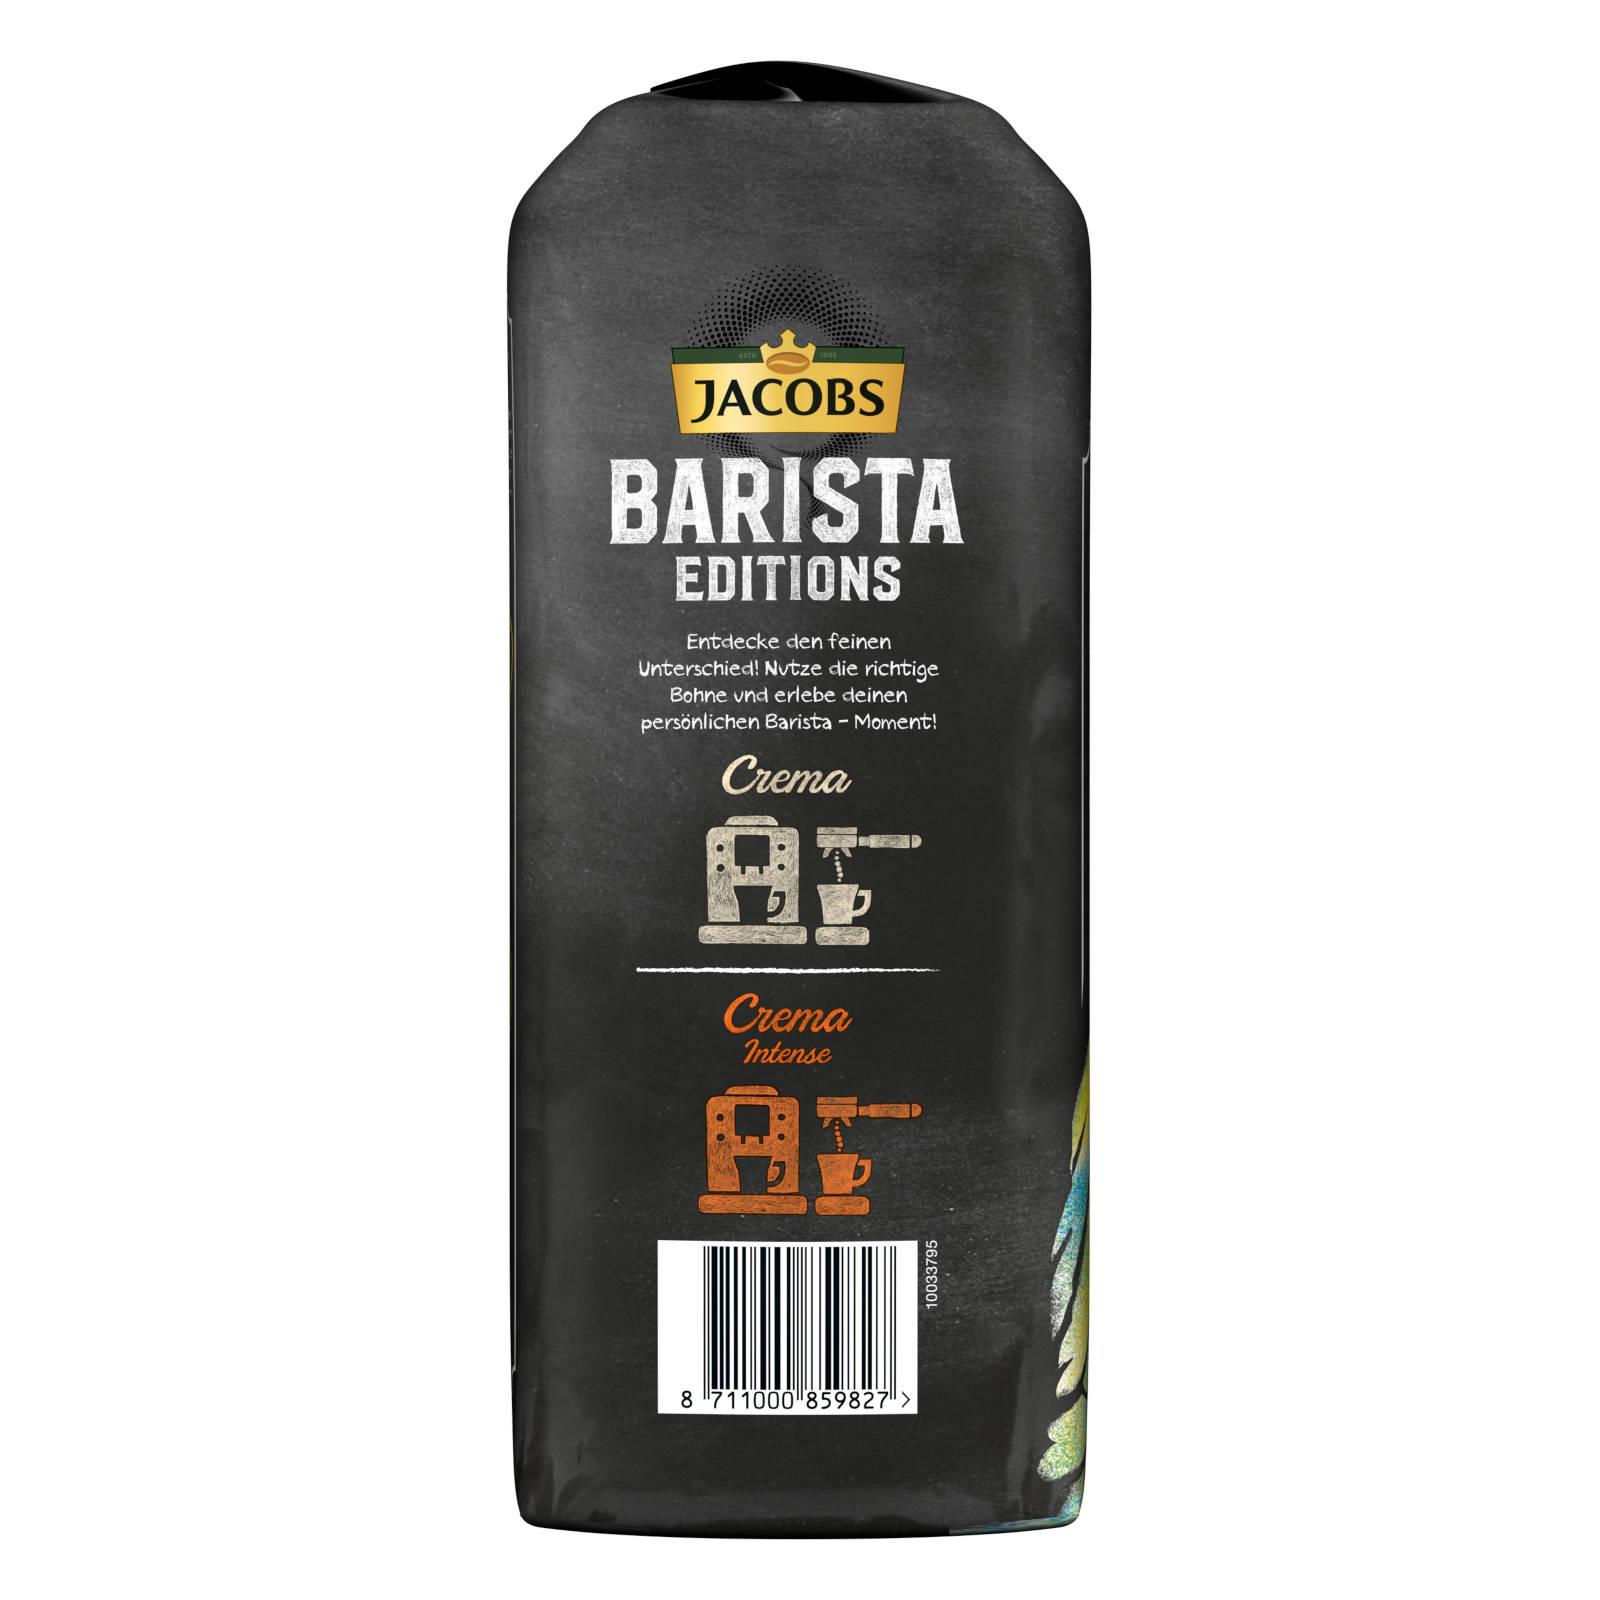 JACOBS (Kaffeevollautomat) x Selektion des Brasilien geröstete Jahres Barista ganze kg 1 4 Editions Kaffeebohnen